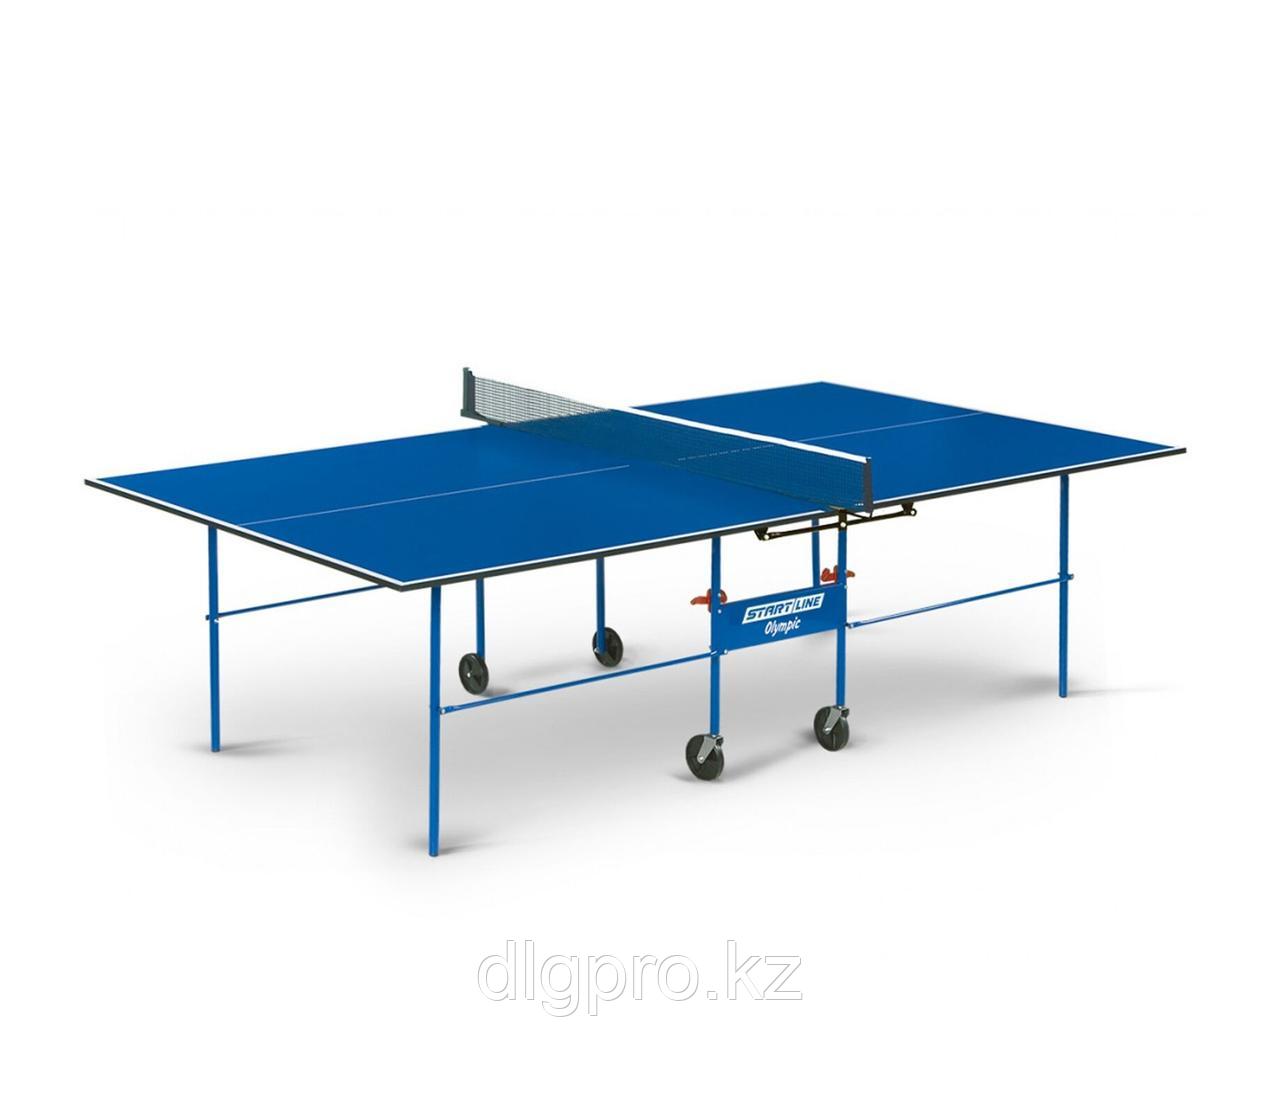 Теннисный стол Start line OLYMPIC Blue, фото 1